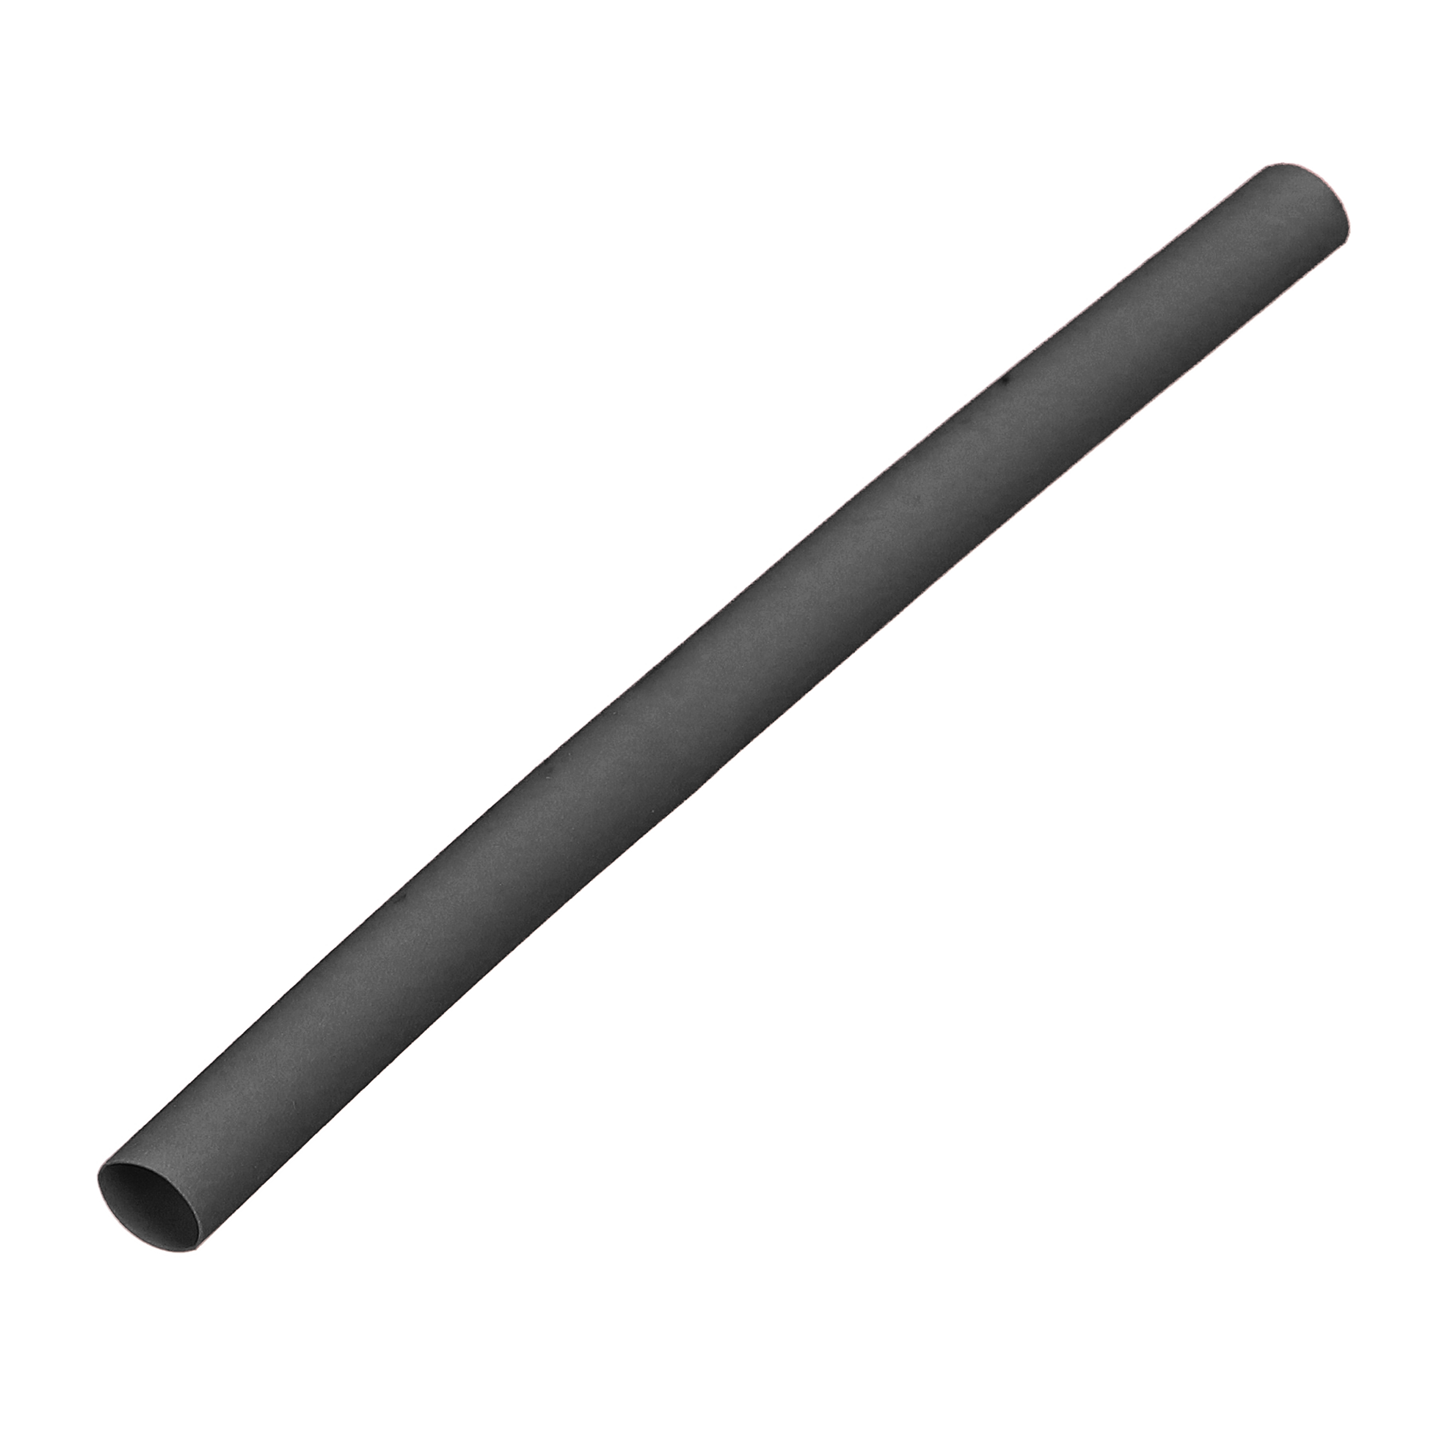 Schrumpfschlauch Ø 6mm, 1m lang, schwarz, in Blisterpackung